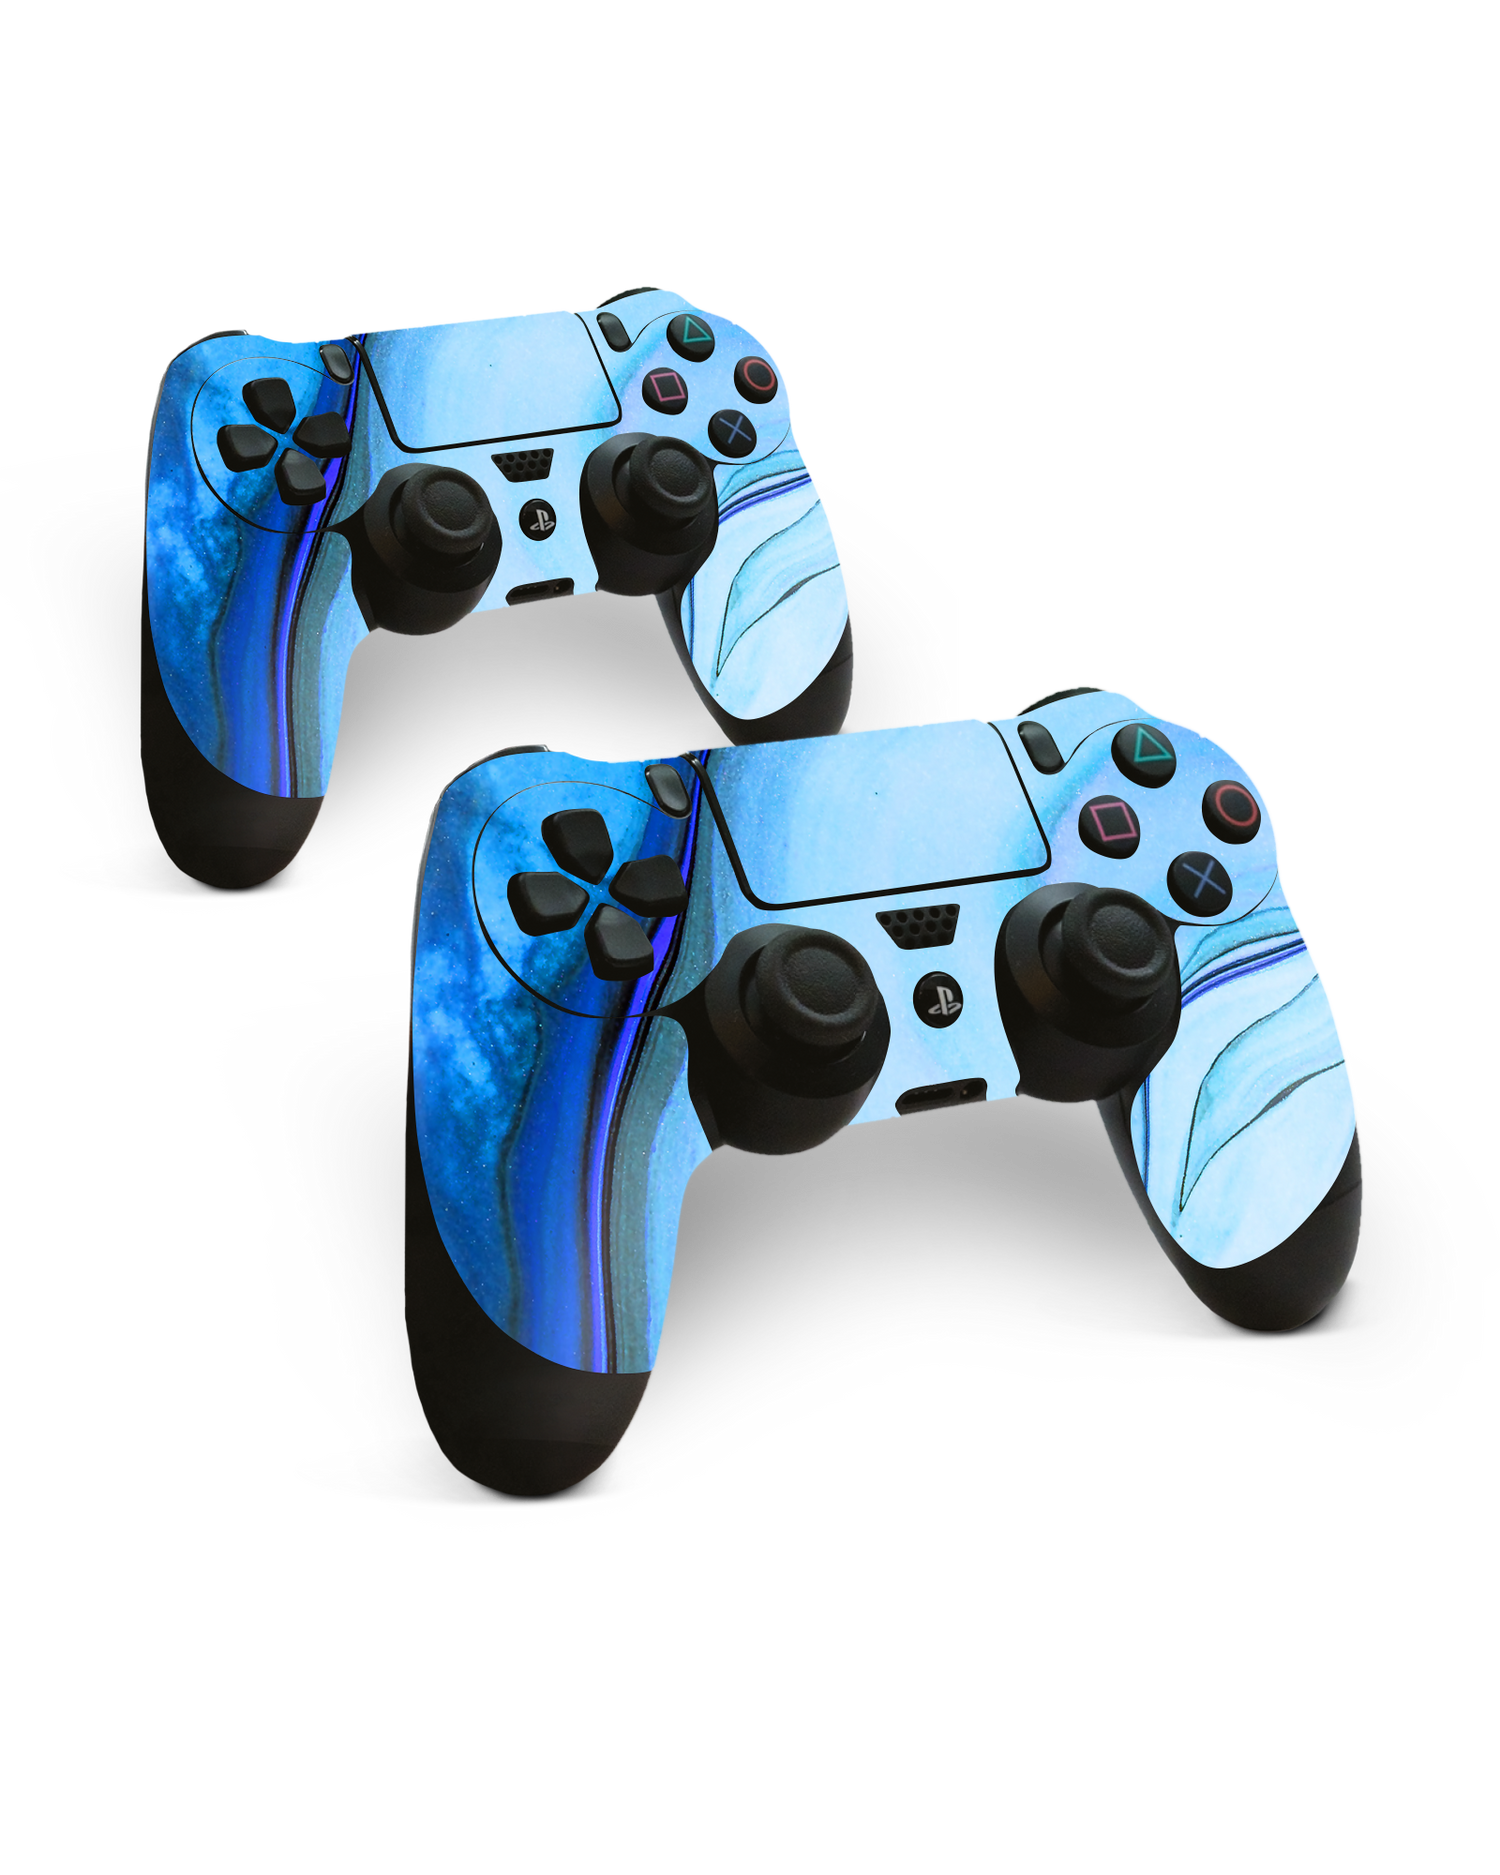 Cool Blues Konsolen Aufkleber für Sony PlayStation 4 Controller: Frontansicht